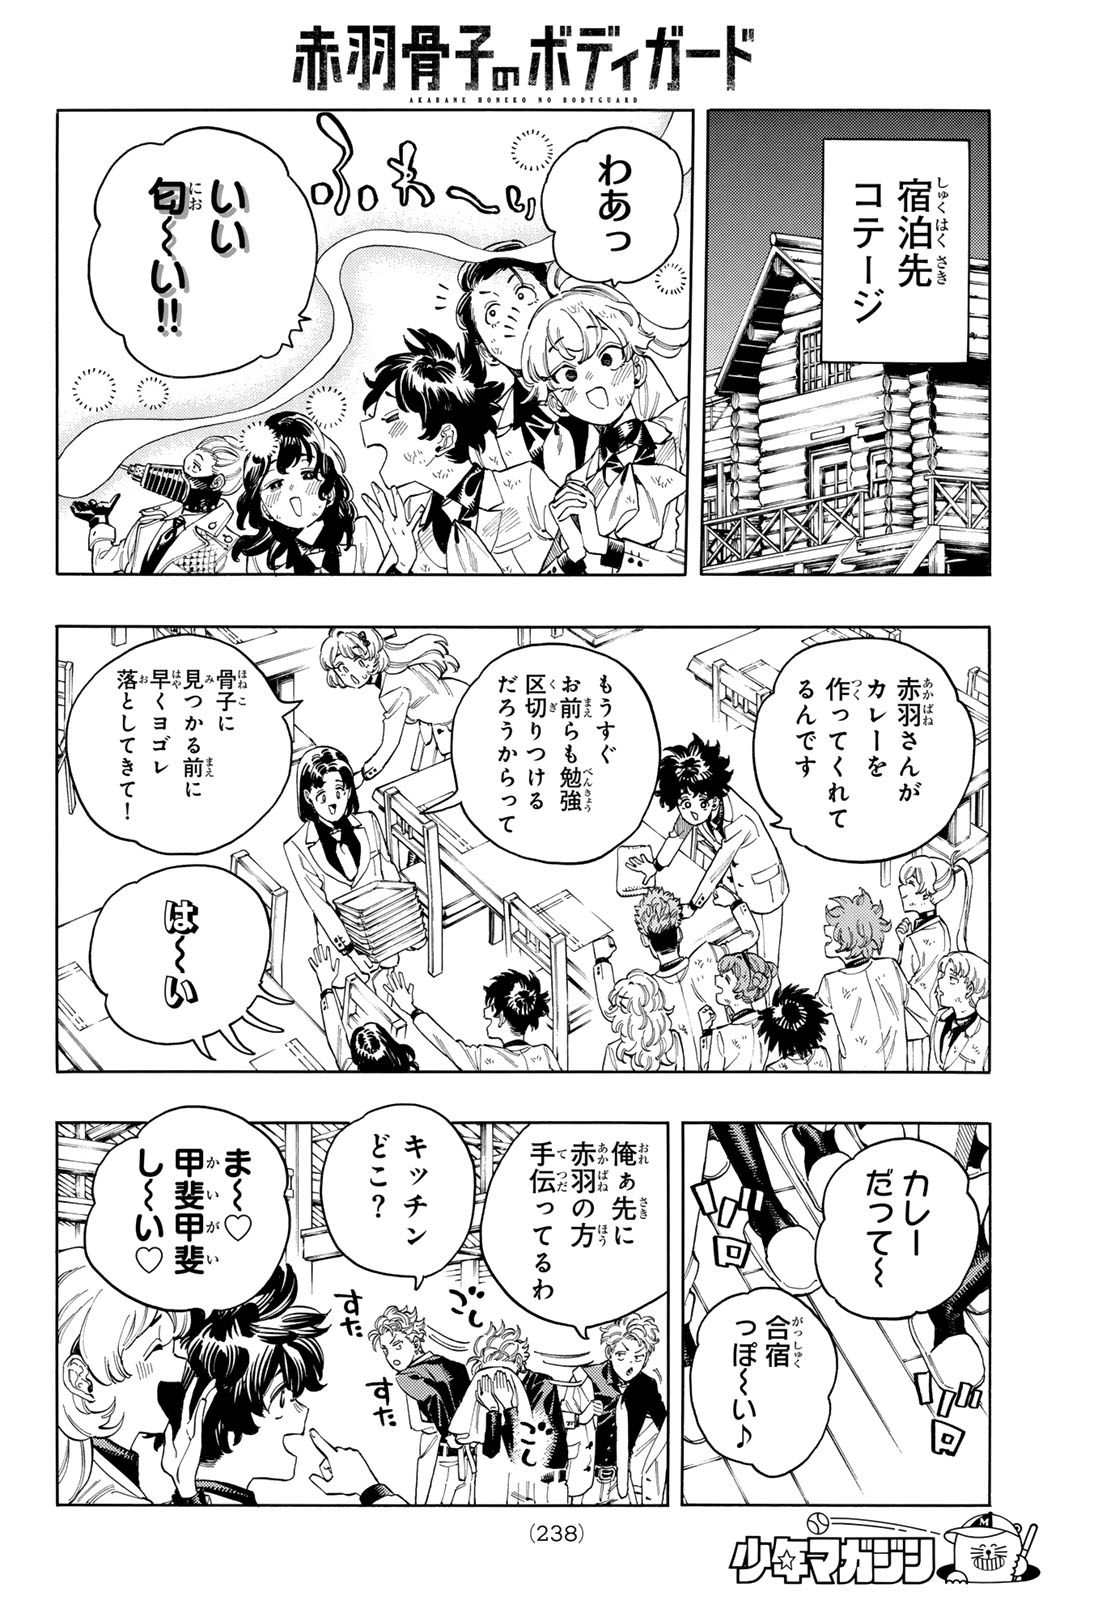 Akabane Honeko no Bodyguard - Chapter 86 - Page 18